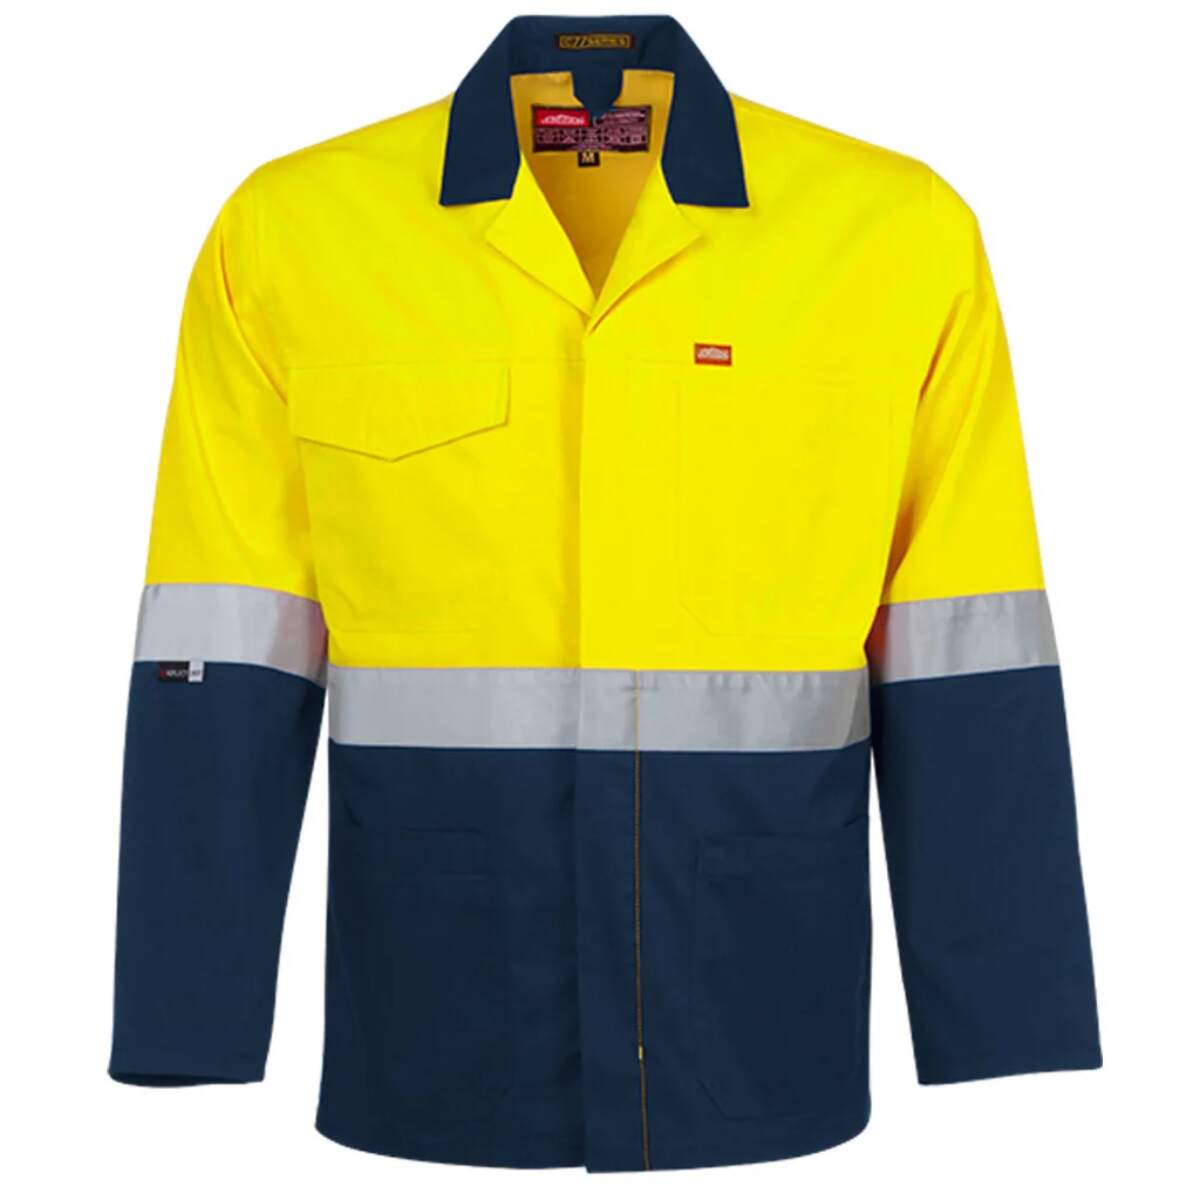 johnson-two-tone-reflective-work-jacket by safety equipments supplier - landmark congo sarl